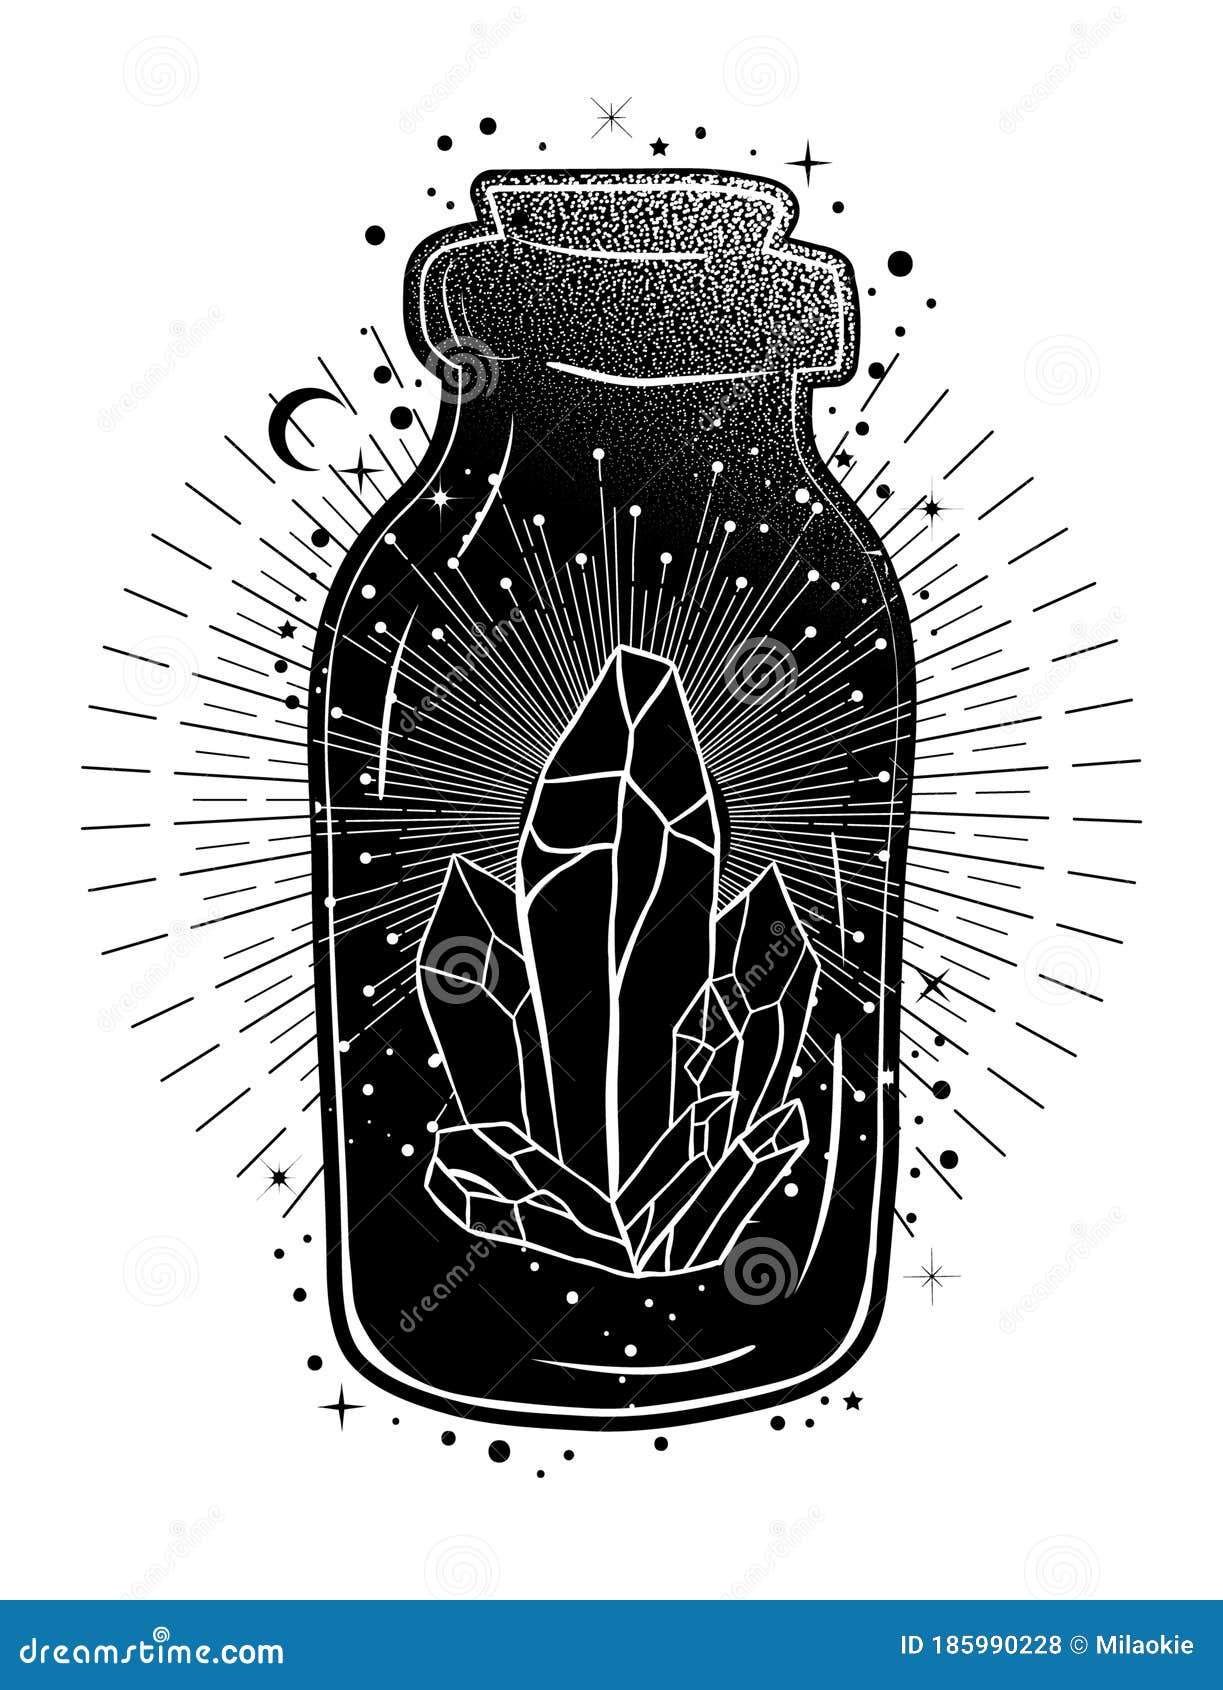 75 Enchanting Potion Bottle Tattoos Designs  Ideas  Tattoo Me Now